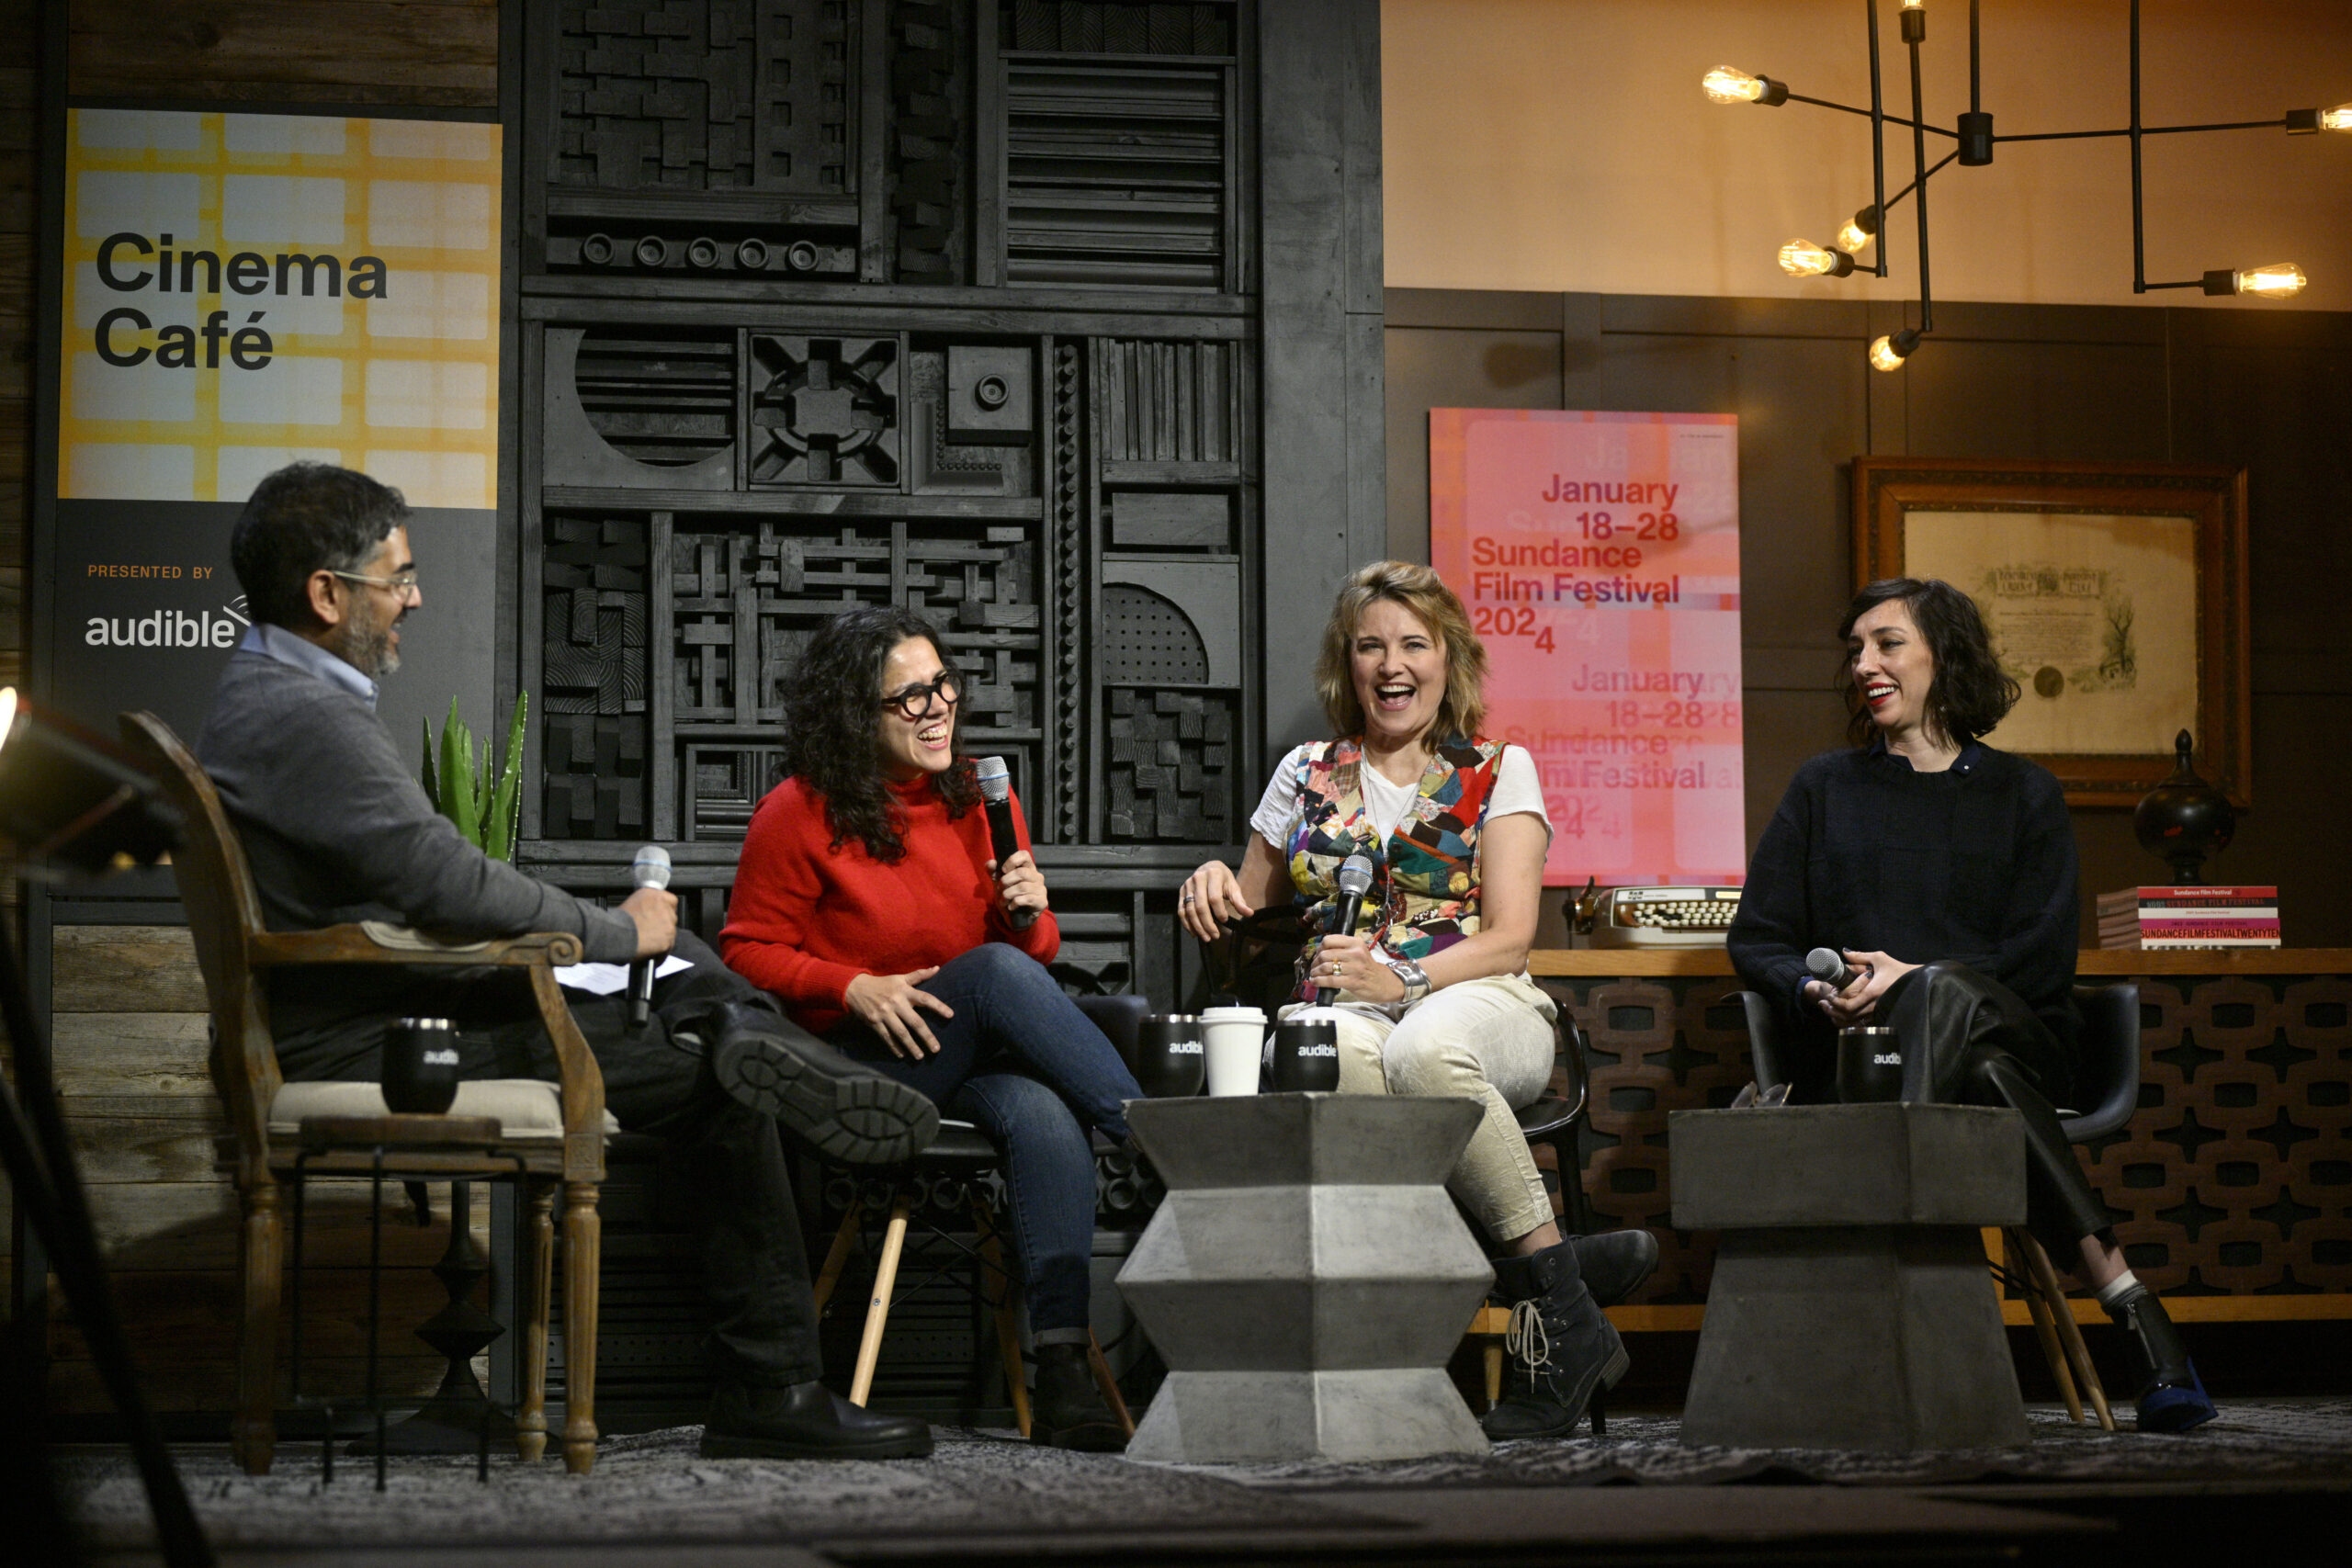 Sudeep Sharma, Carla Gutiérrez, Lucy Lawless, and Lana Wilson sit on stage at the Cinema Café.